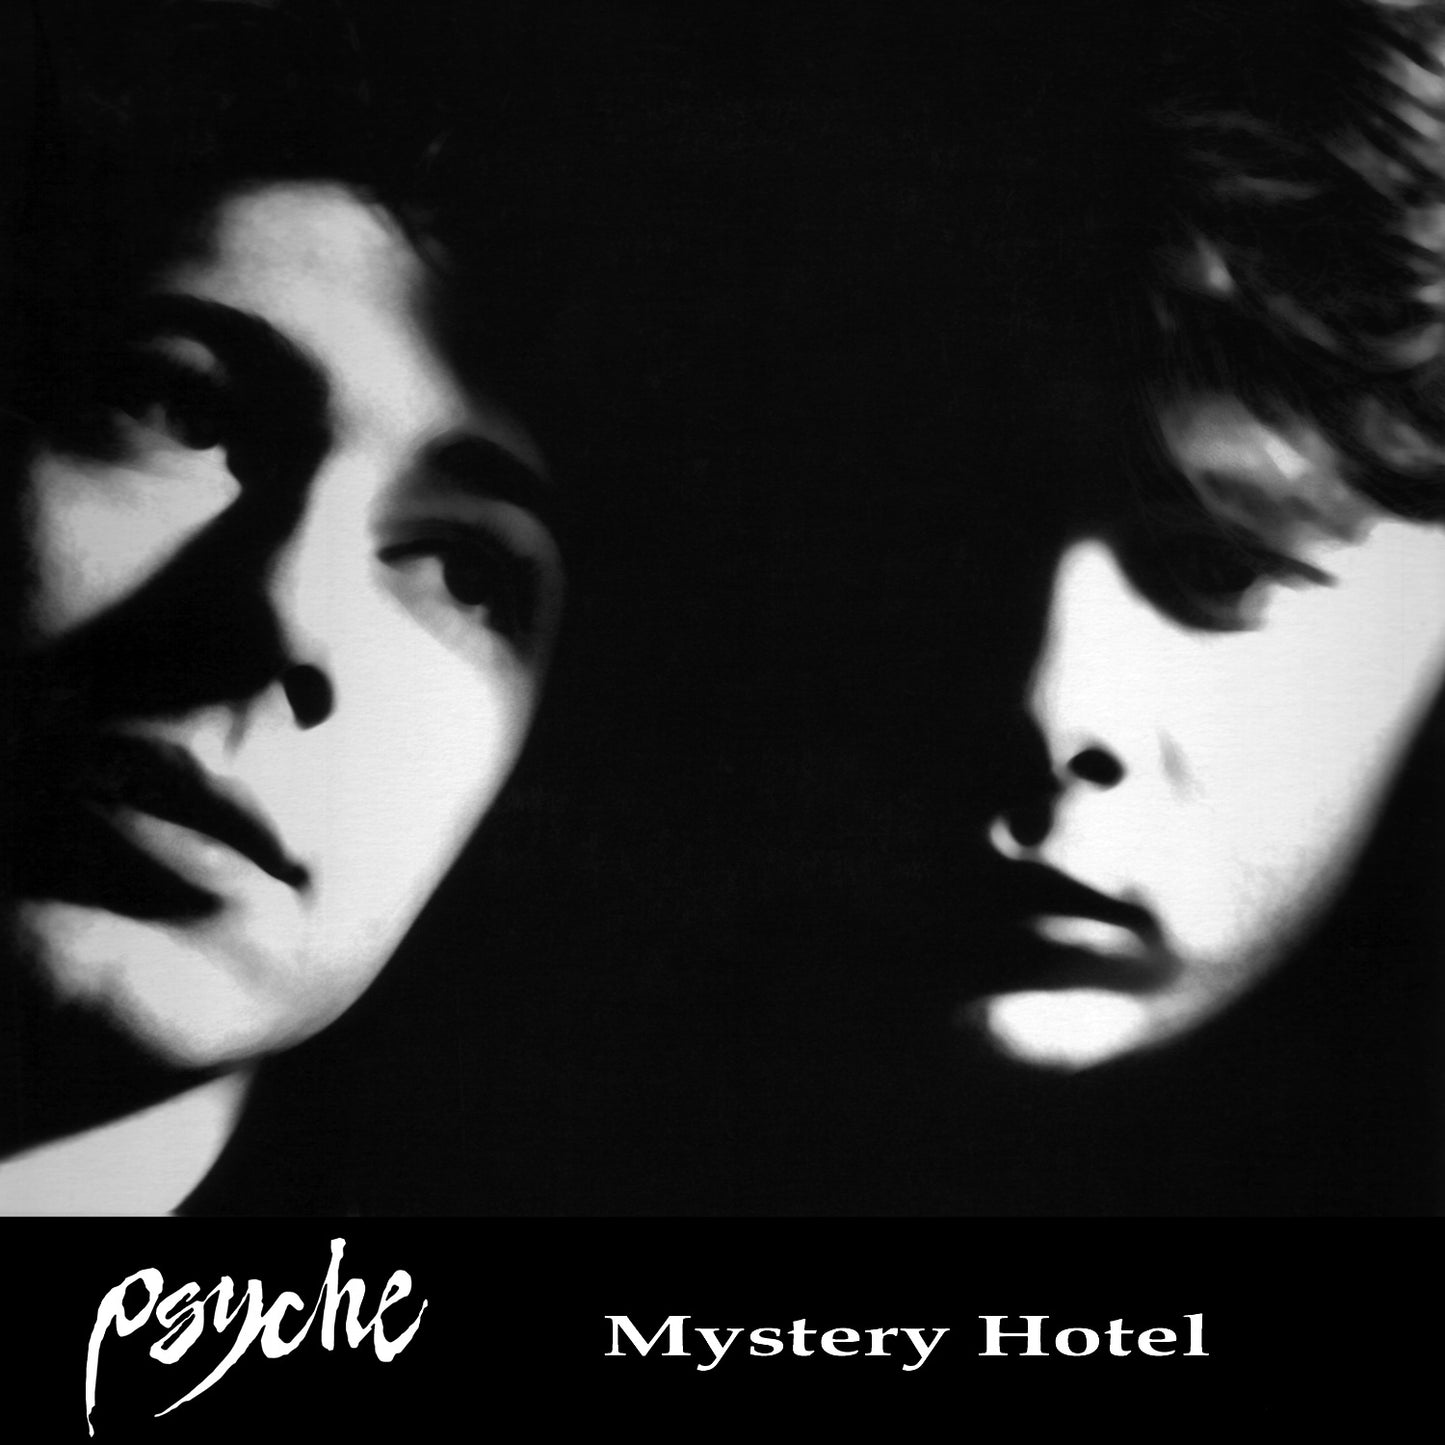 Psyche "Mystery Hotel"